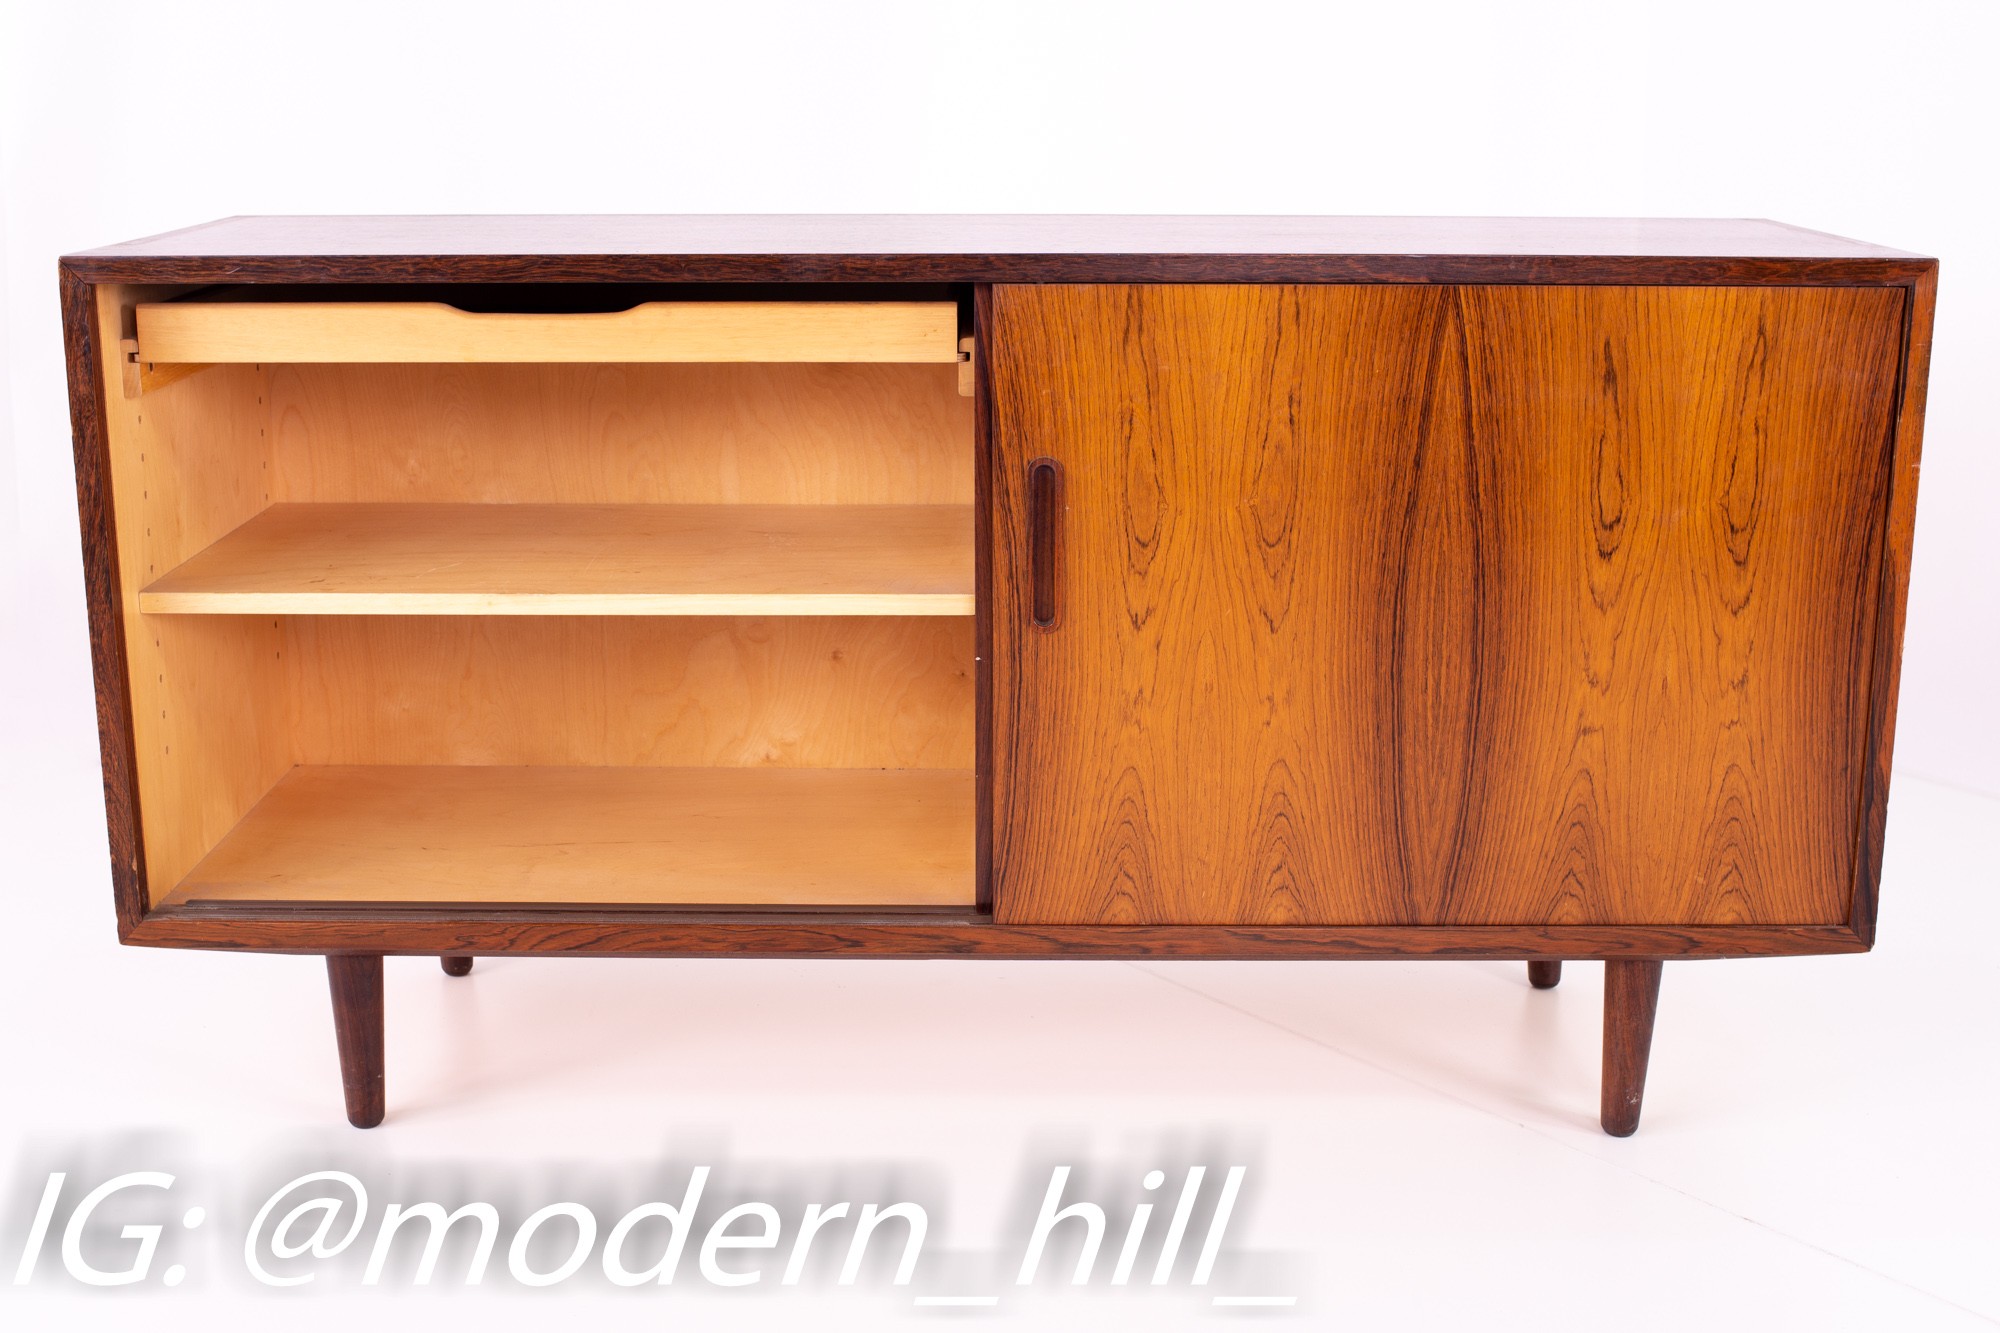 Restored Poul Hundevad Danish Mid Century Rosewood Petite Sideboard Credenza Media Cabinet